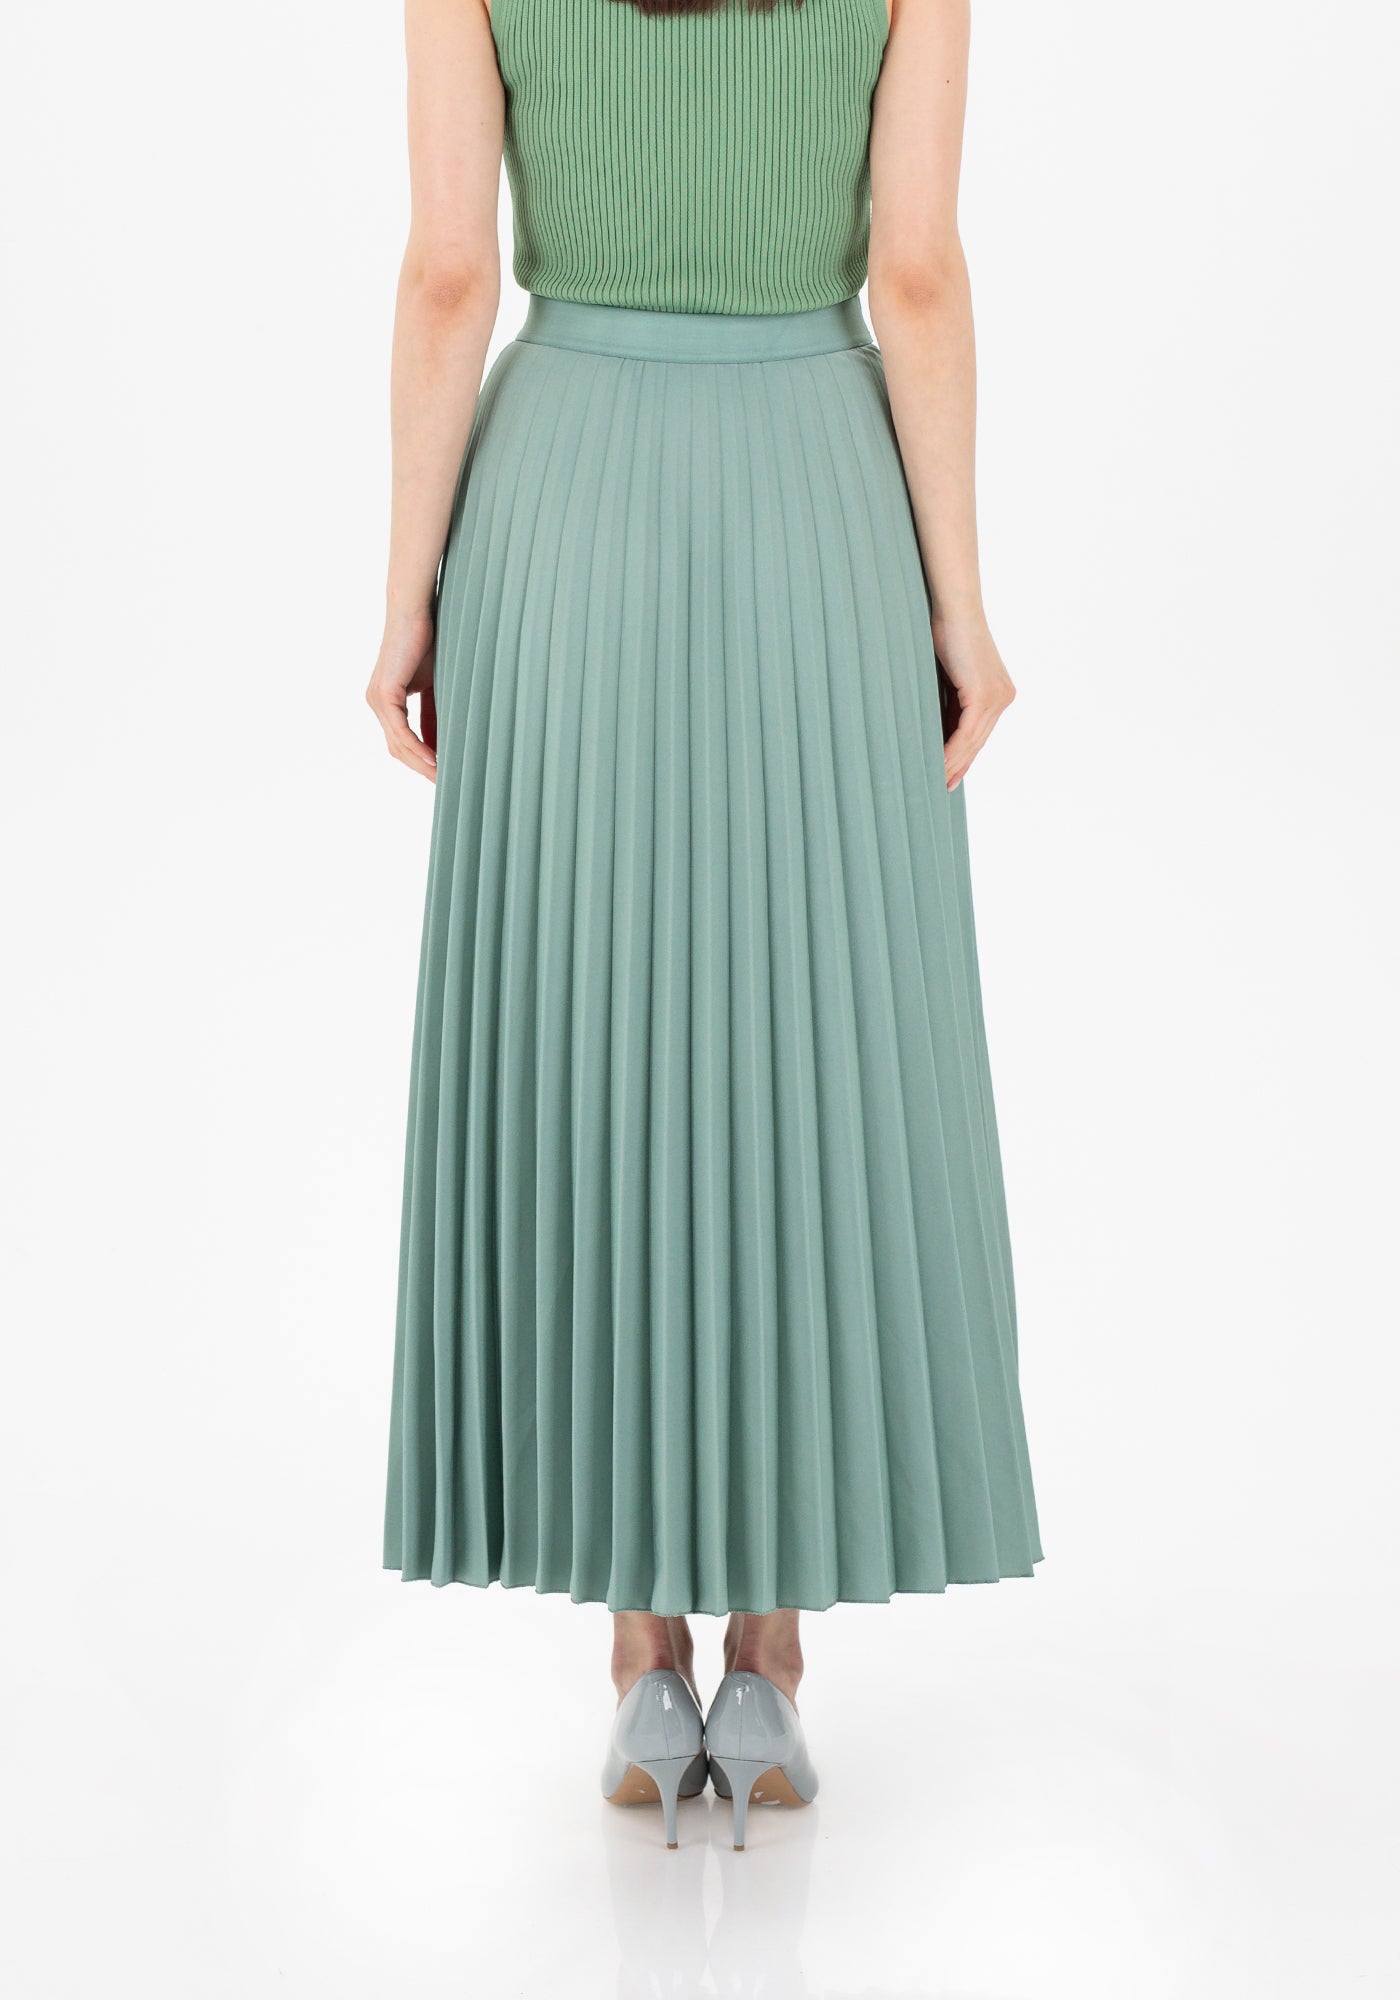 Mint Pleated Maxi Skirt Elastic Waist Band Ankle Length Plisse Skirt G-Line